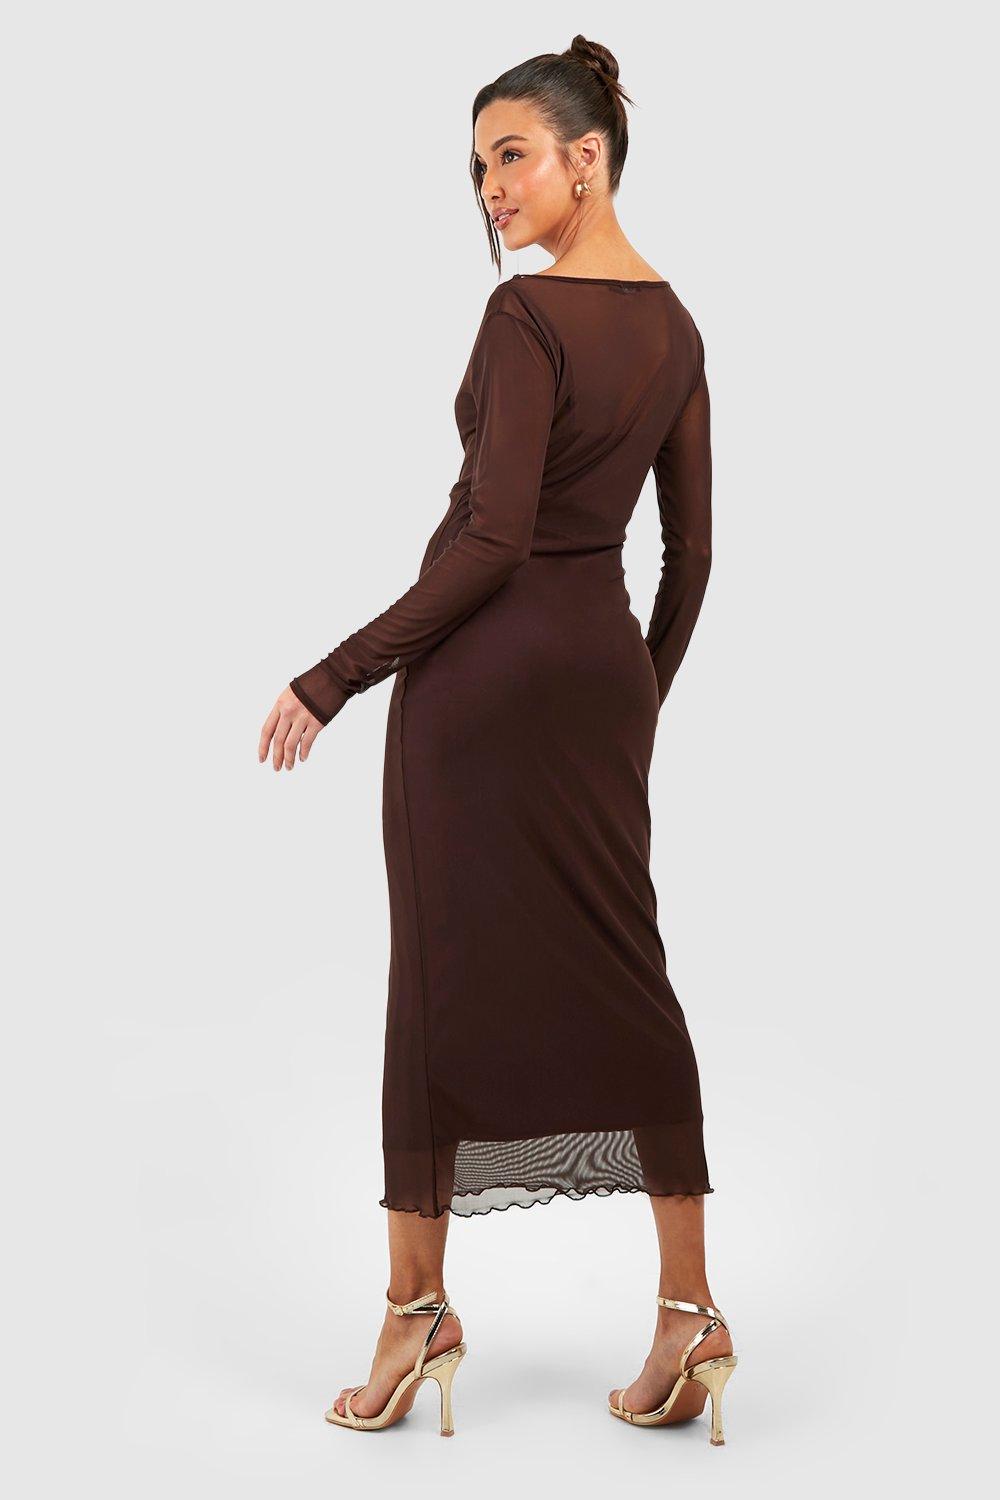 Women's Sheer Mesh Contrast Midaxi Dress